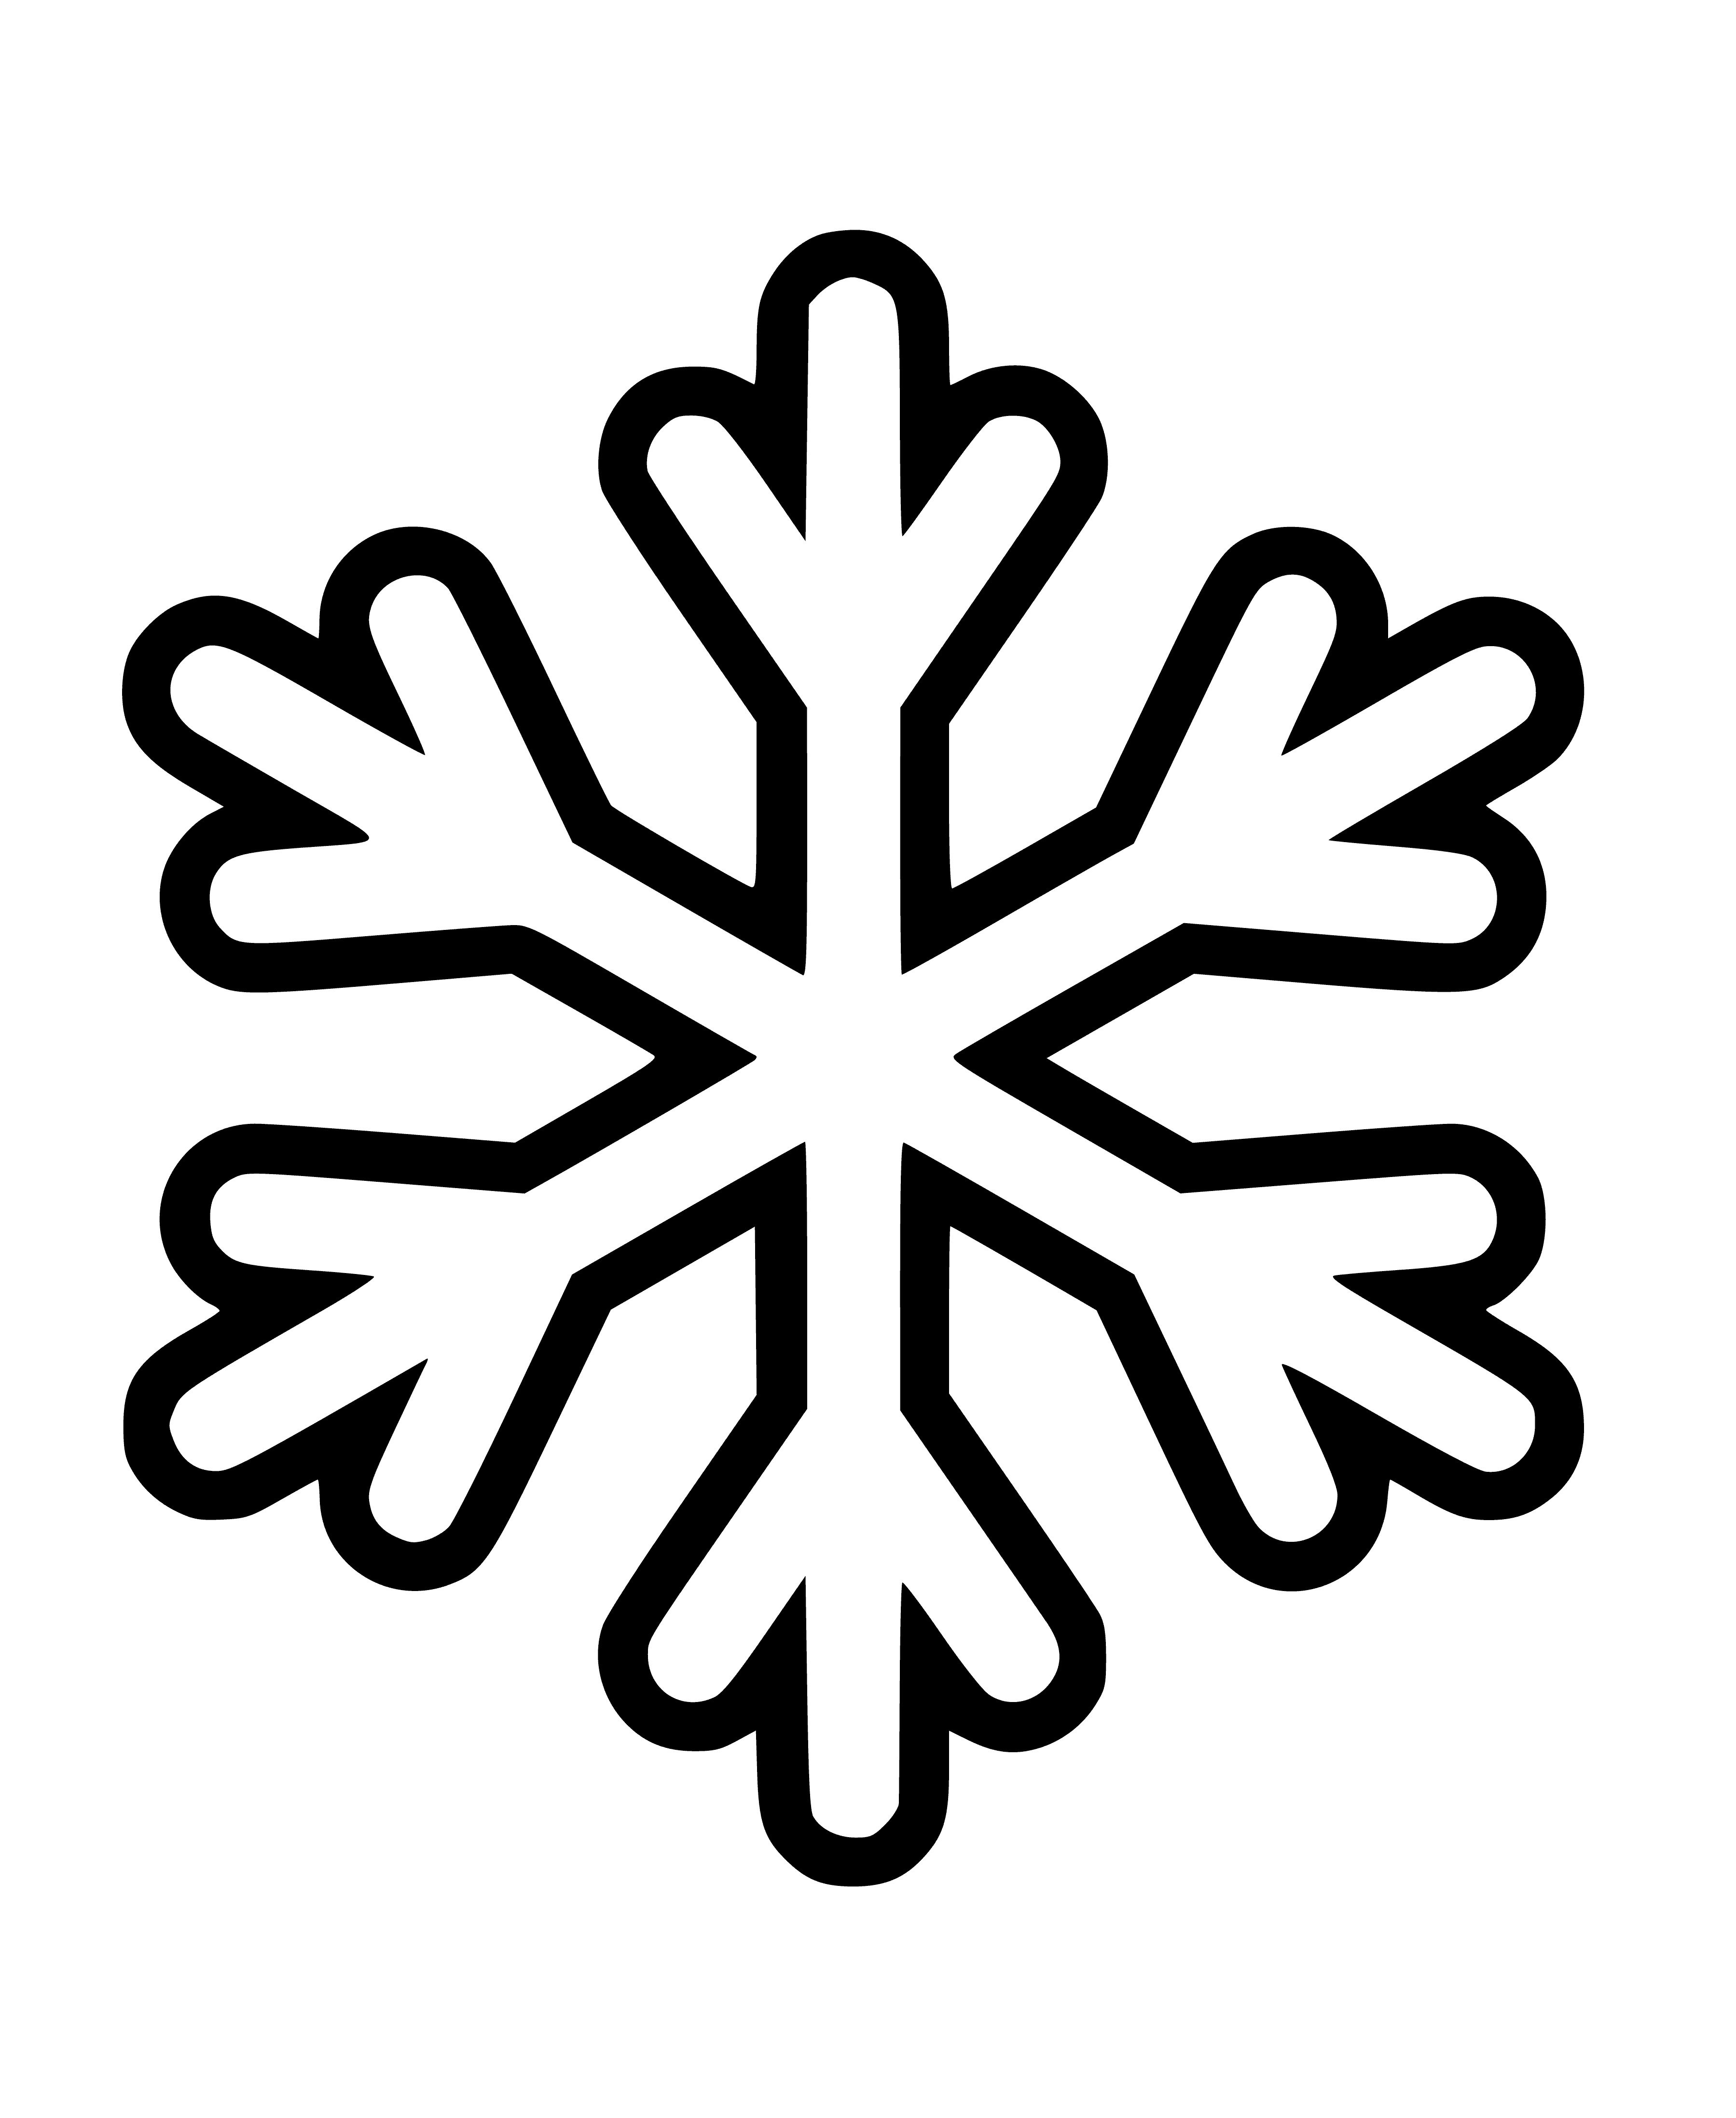 Flocon de neige simple coloriage